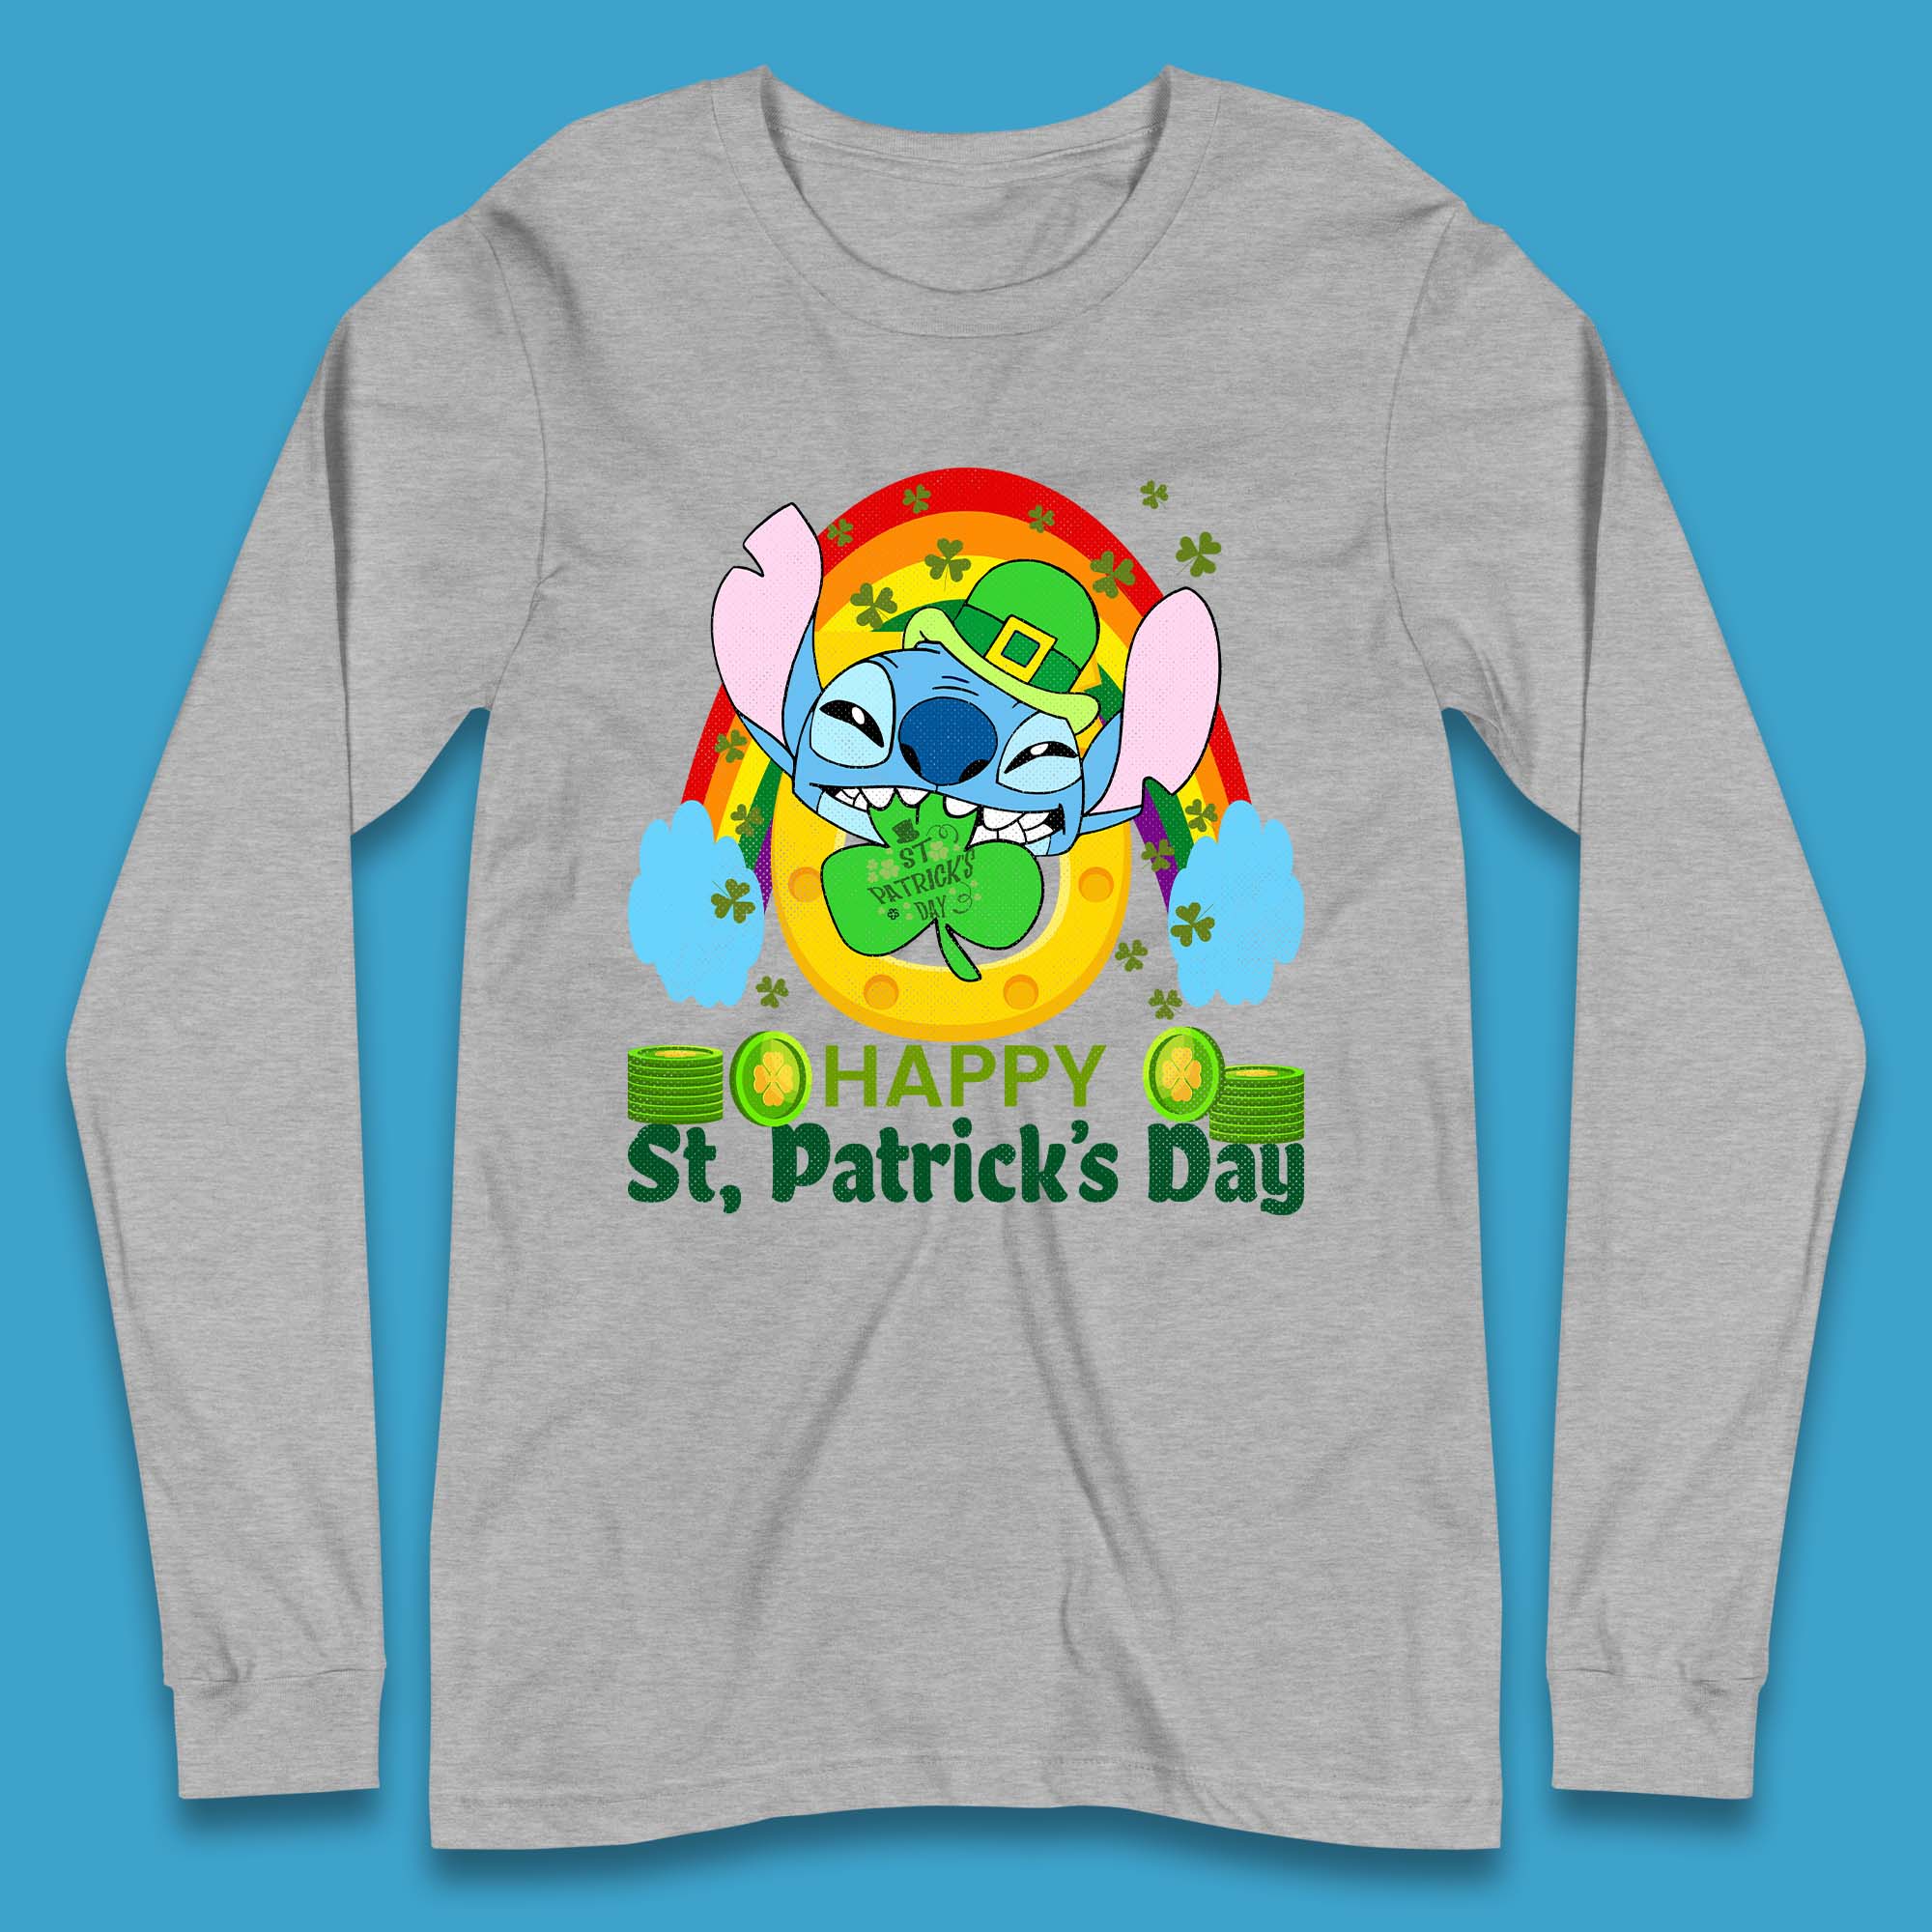 St. Patrick's Day Stitch Long Sleeve T-Shirt